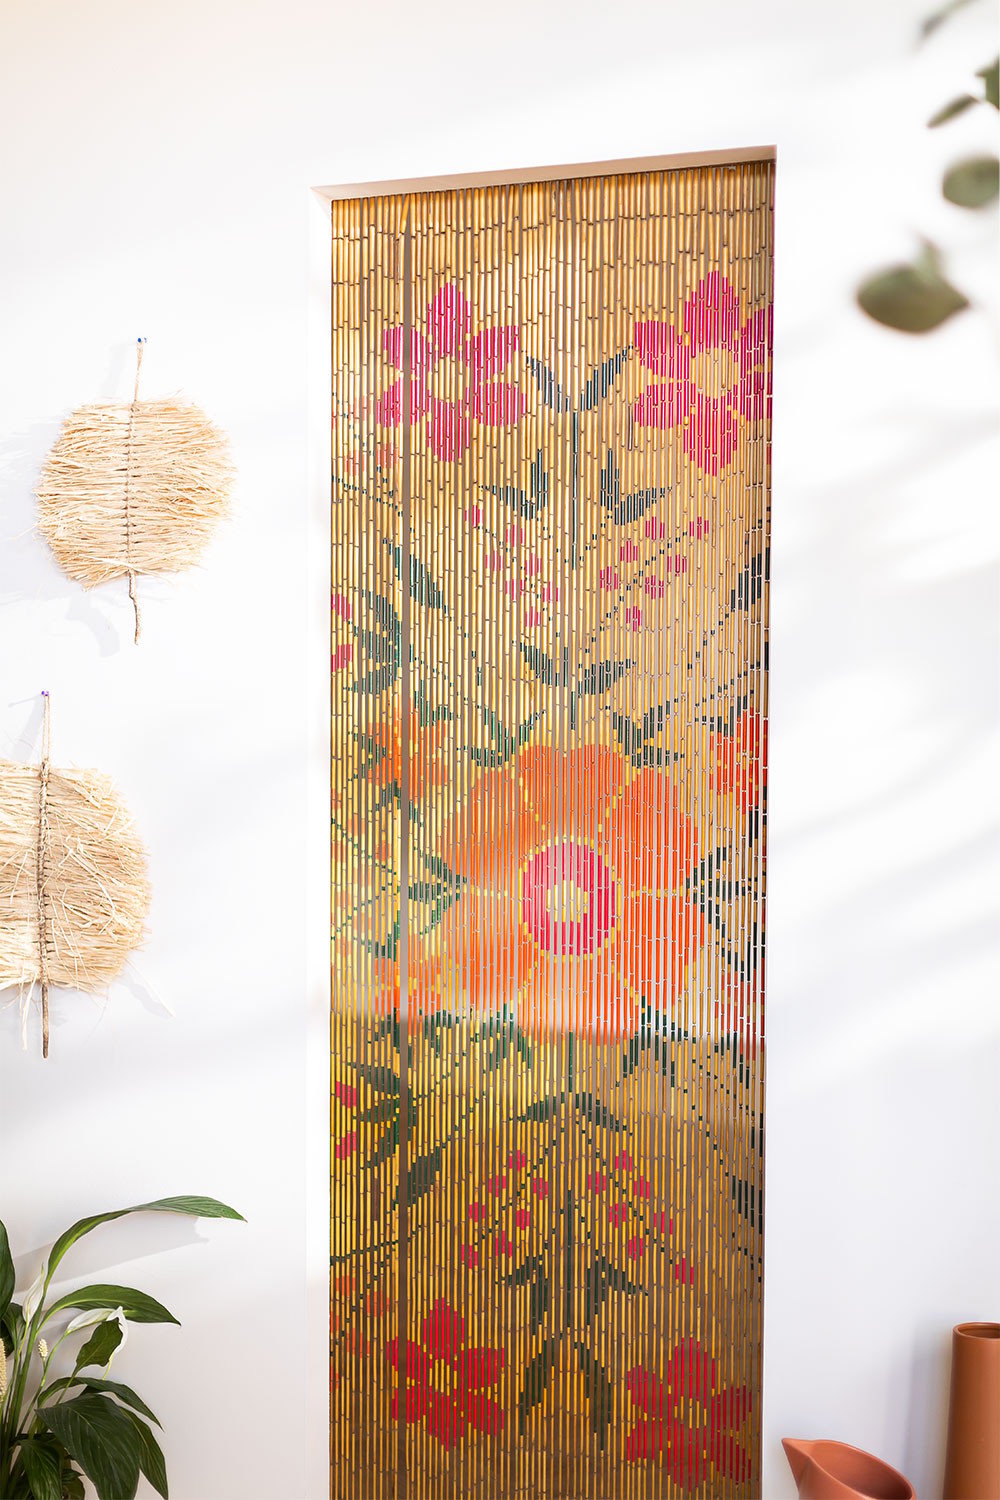 Zaslona bambusowa Blome, obrazek w galerii 1